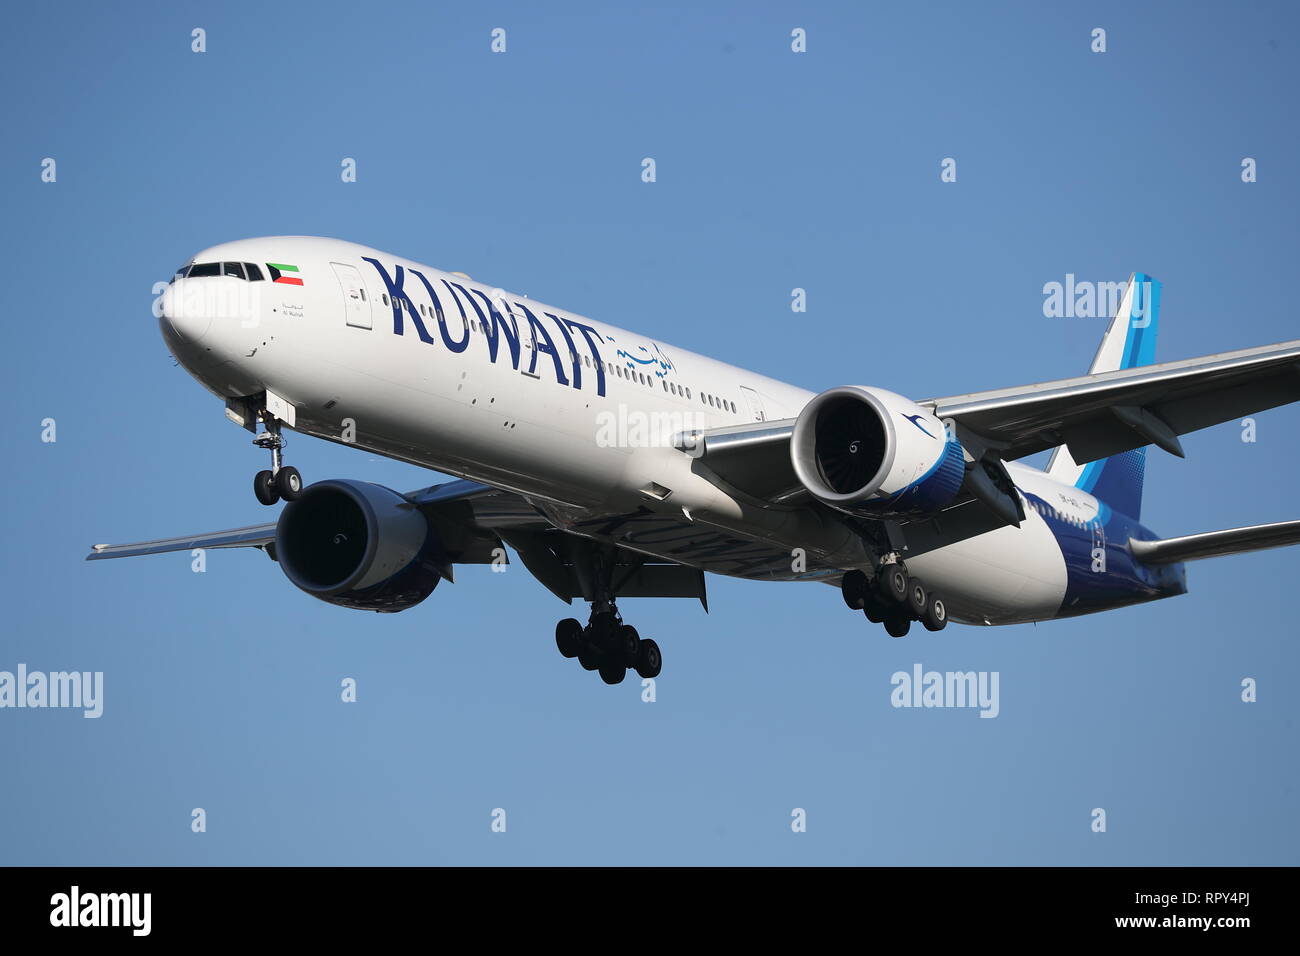 Kuwait Airways Boeing 777 9K-AOL landing at London Heathrow Airport, UK Stock Photo